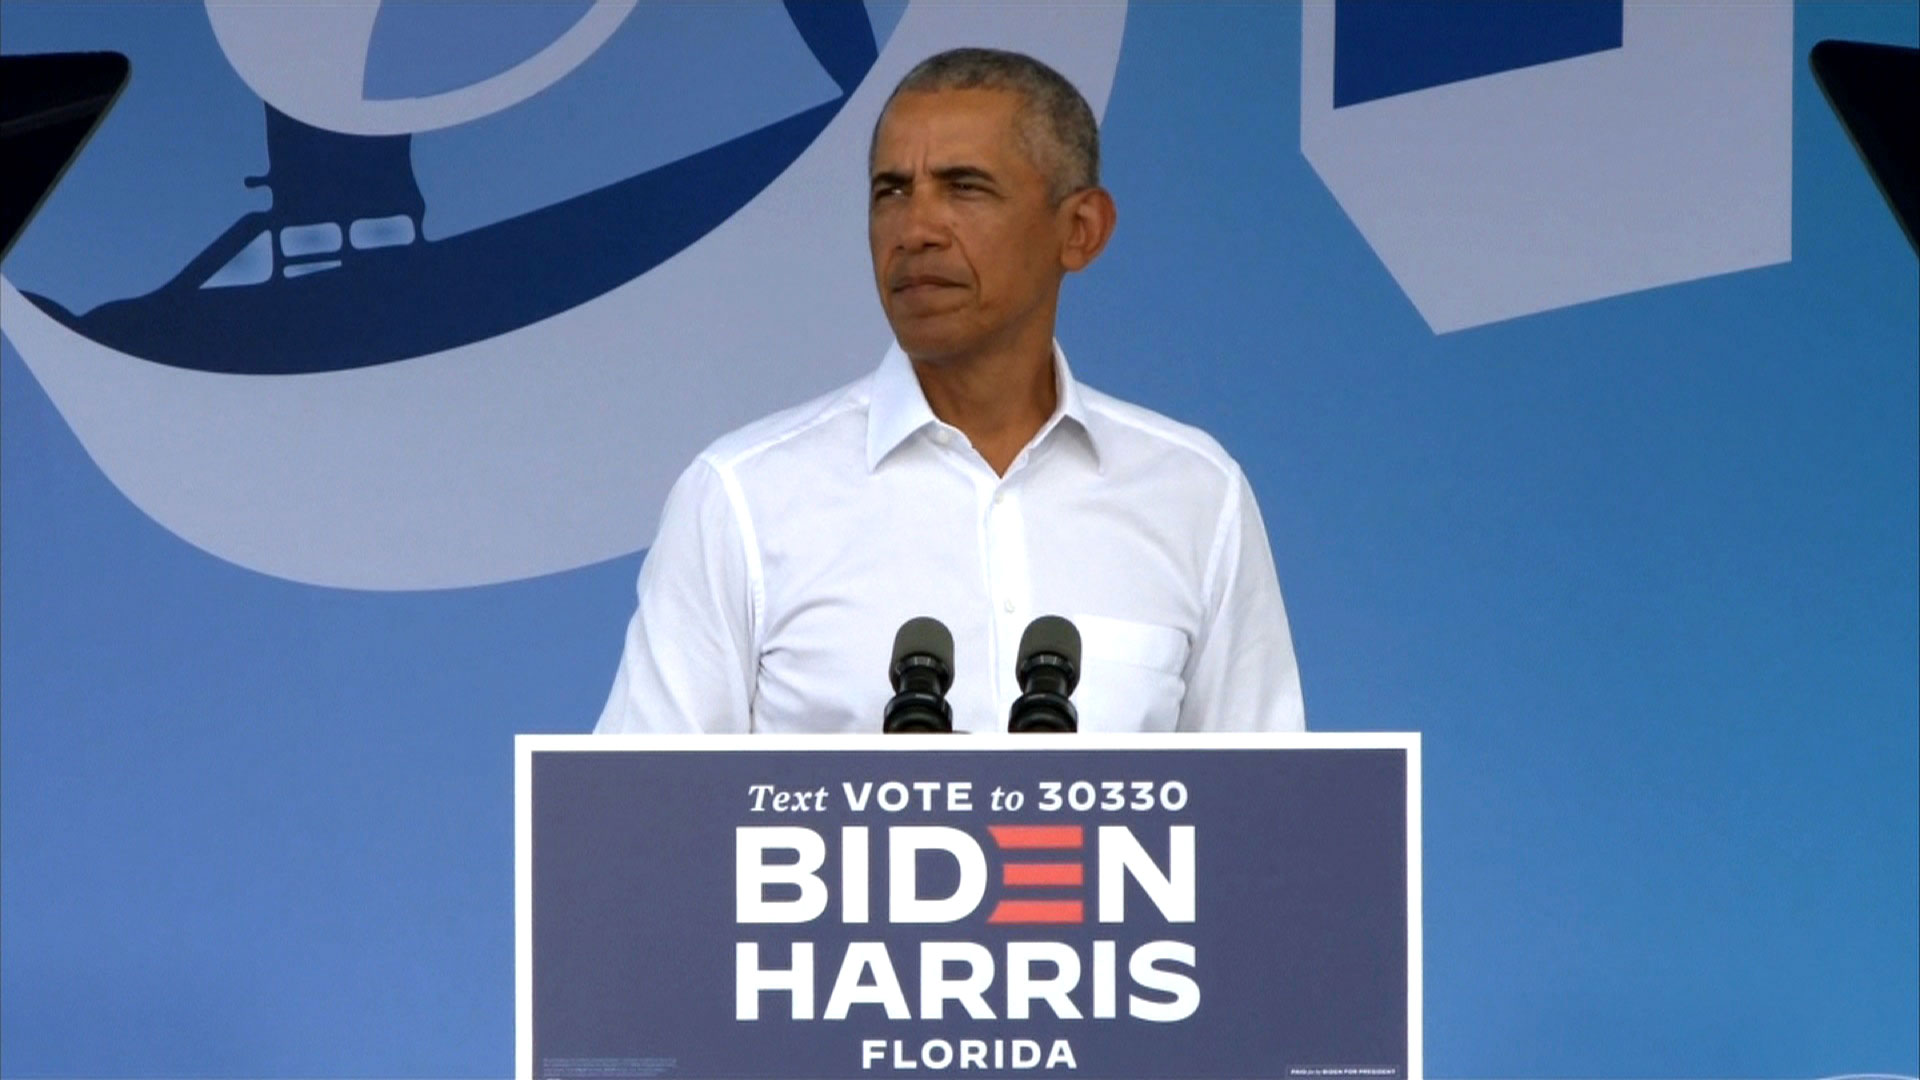 Former President Barack Obama speaks at an event for his former Vice President Joe Biden in Miami, Florida, on Saturday, October 24.